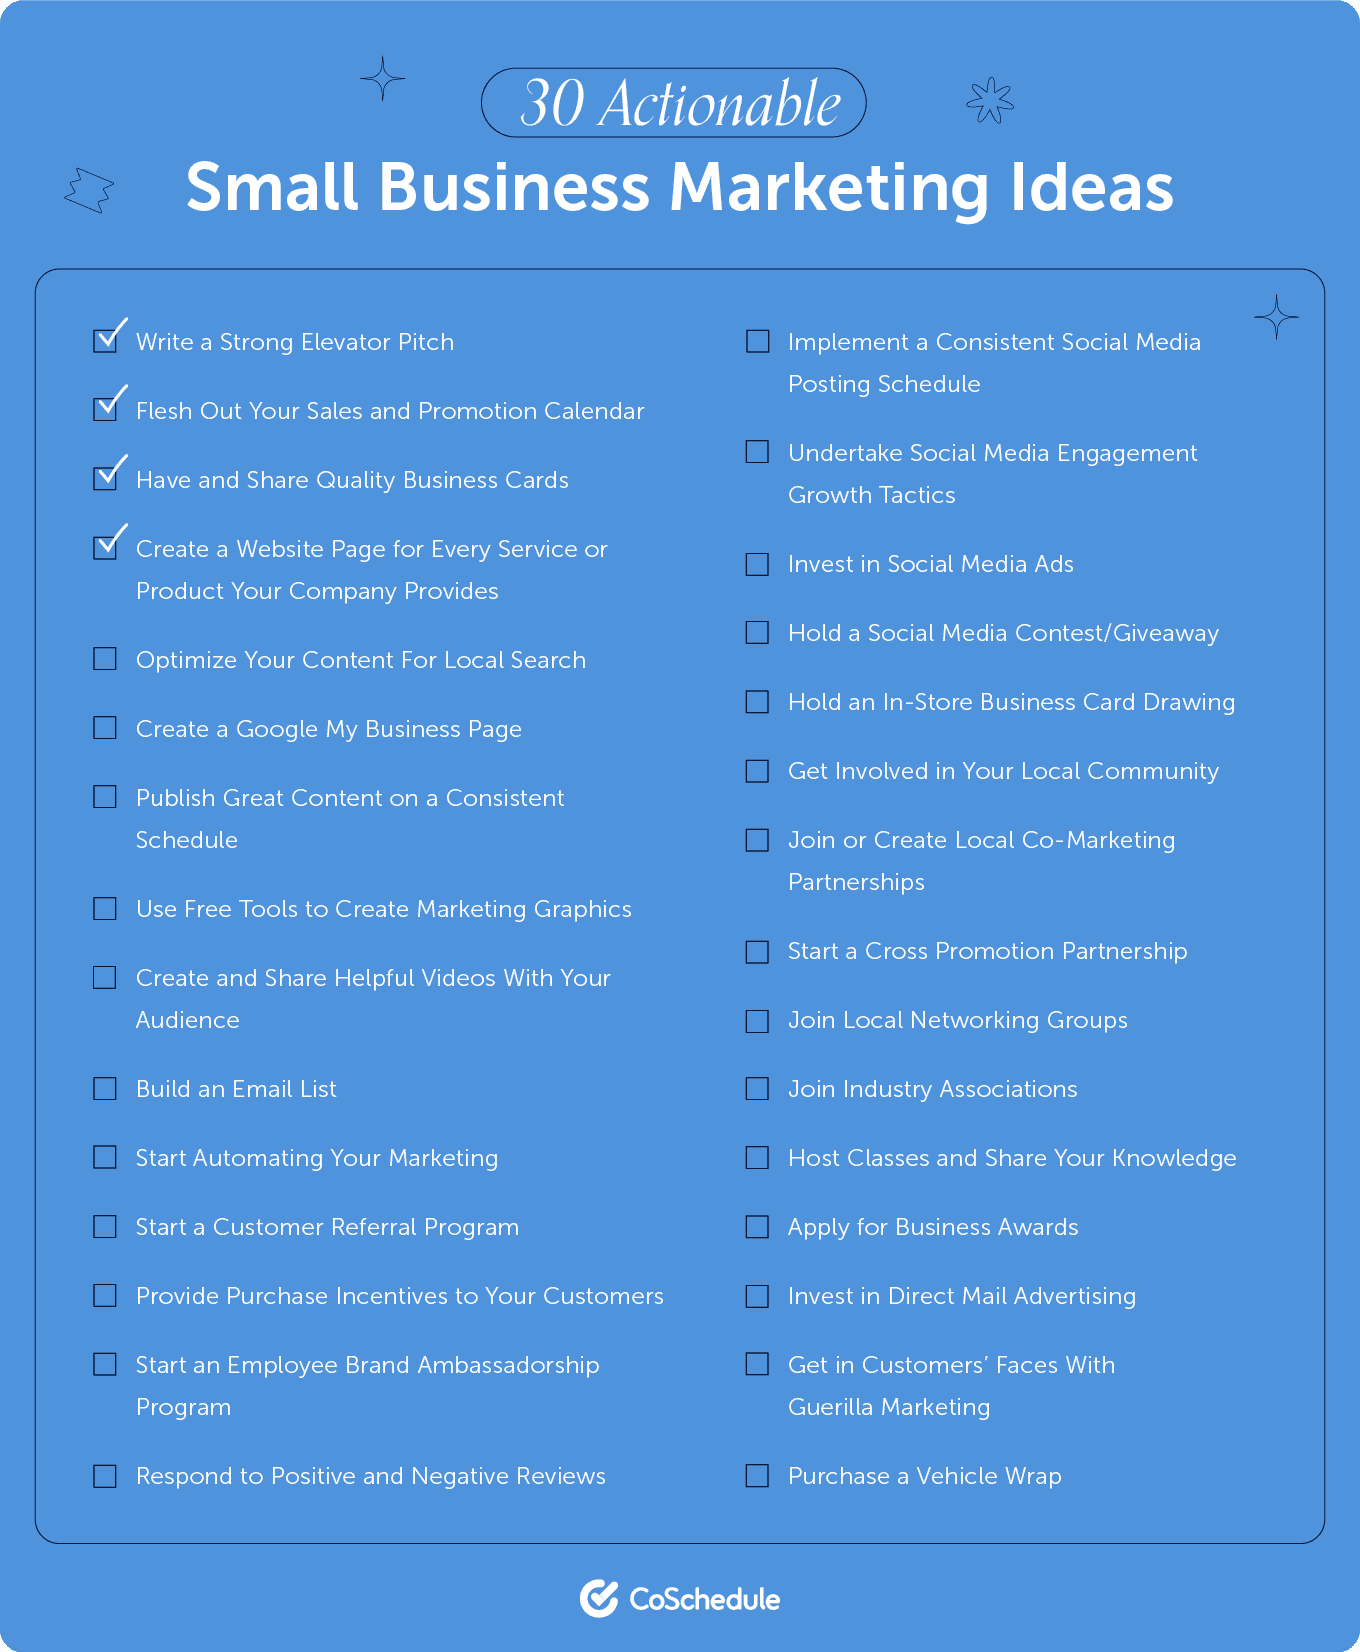 Small Business Marketing Ideas Checklist - 30 Actionable Small Business Marketing Ideas